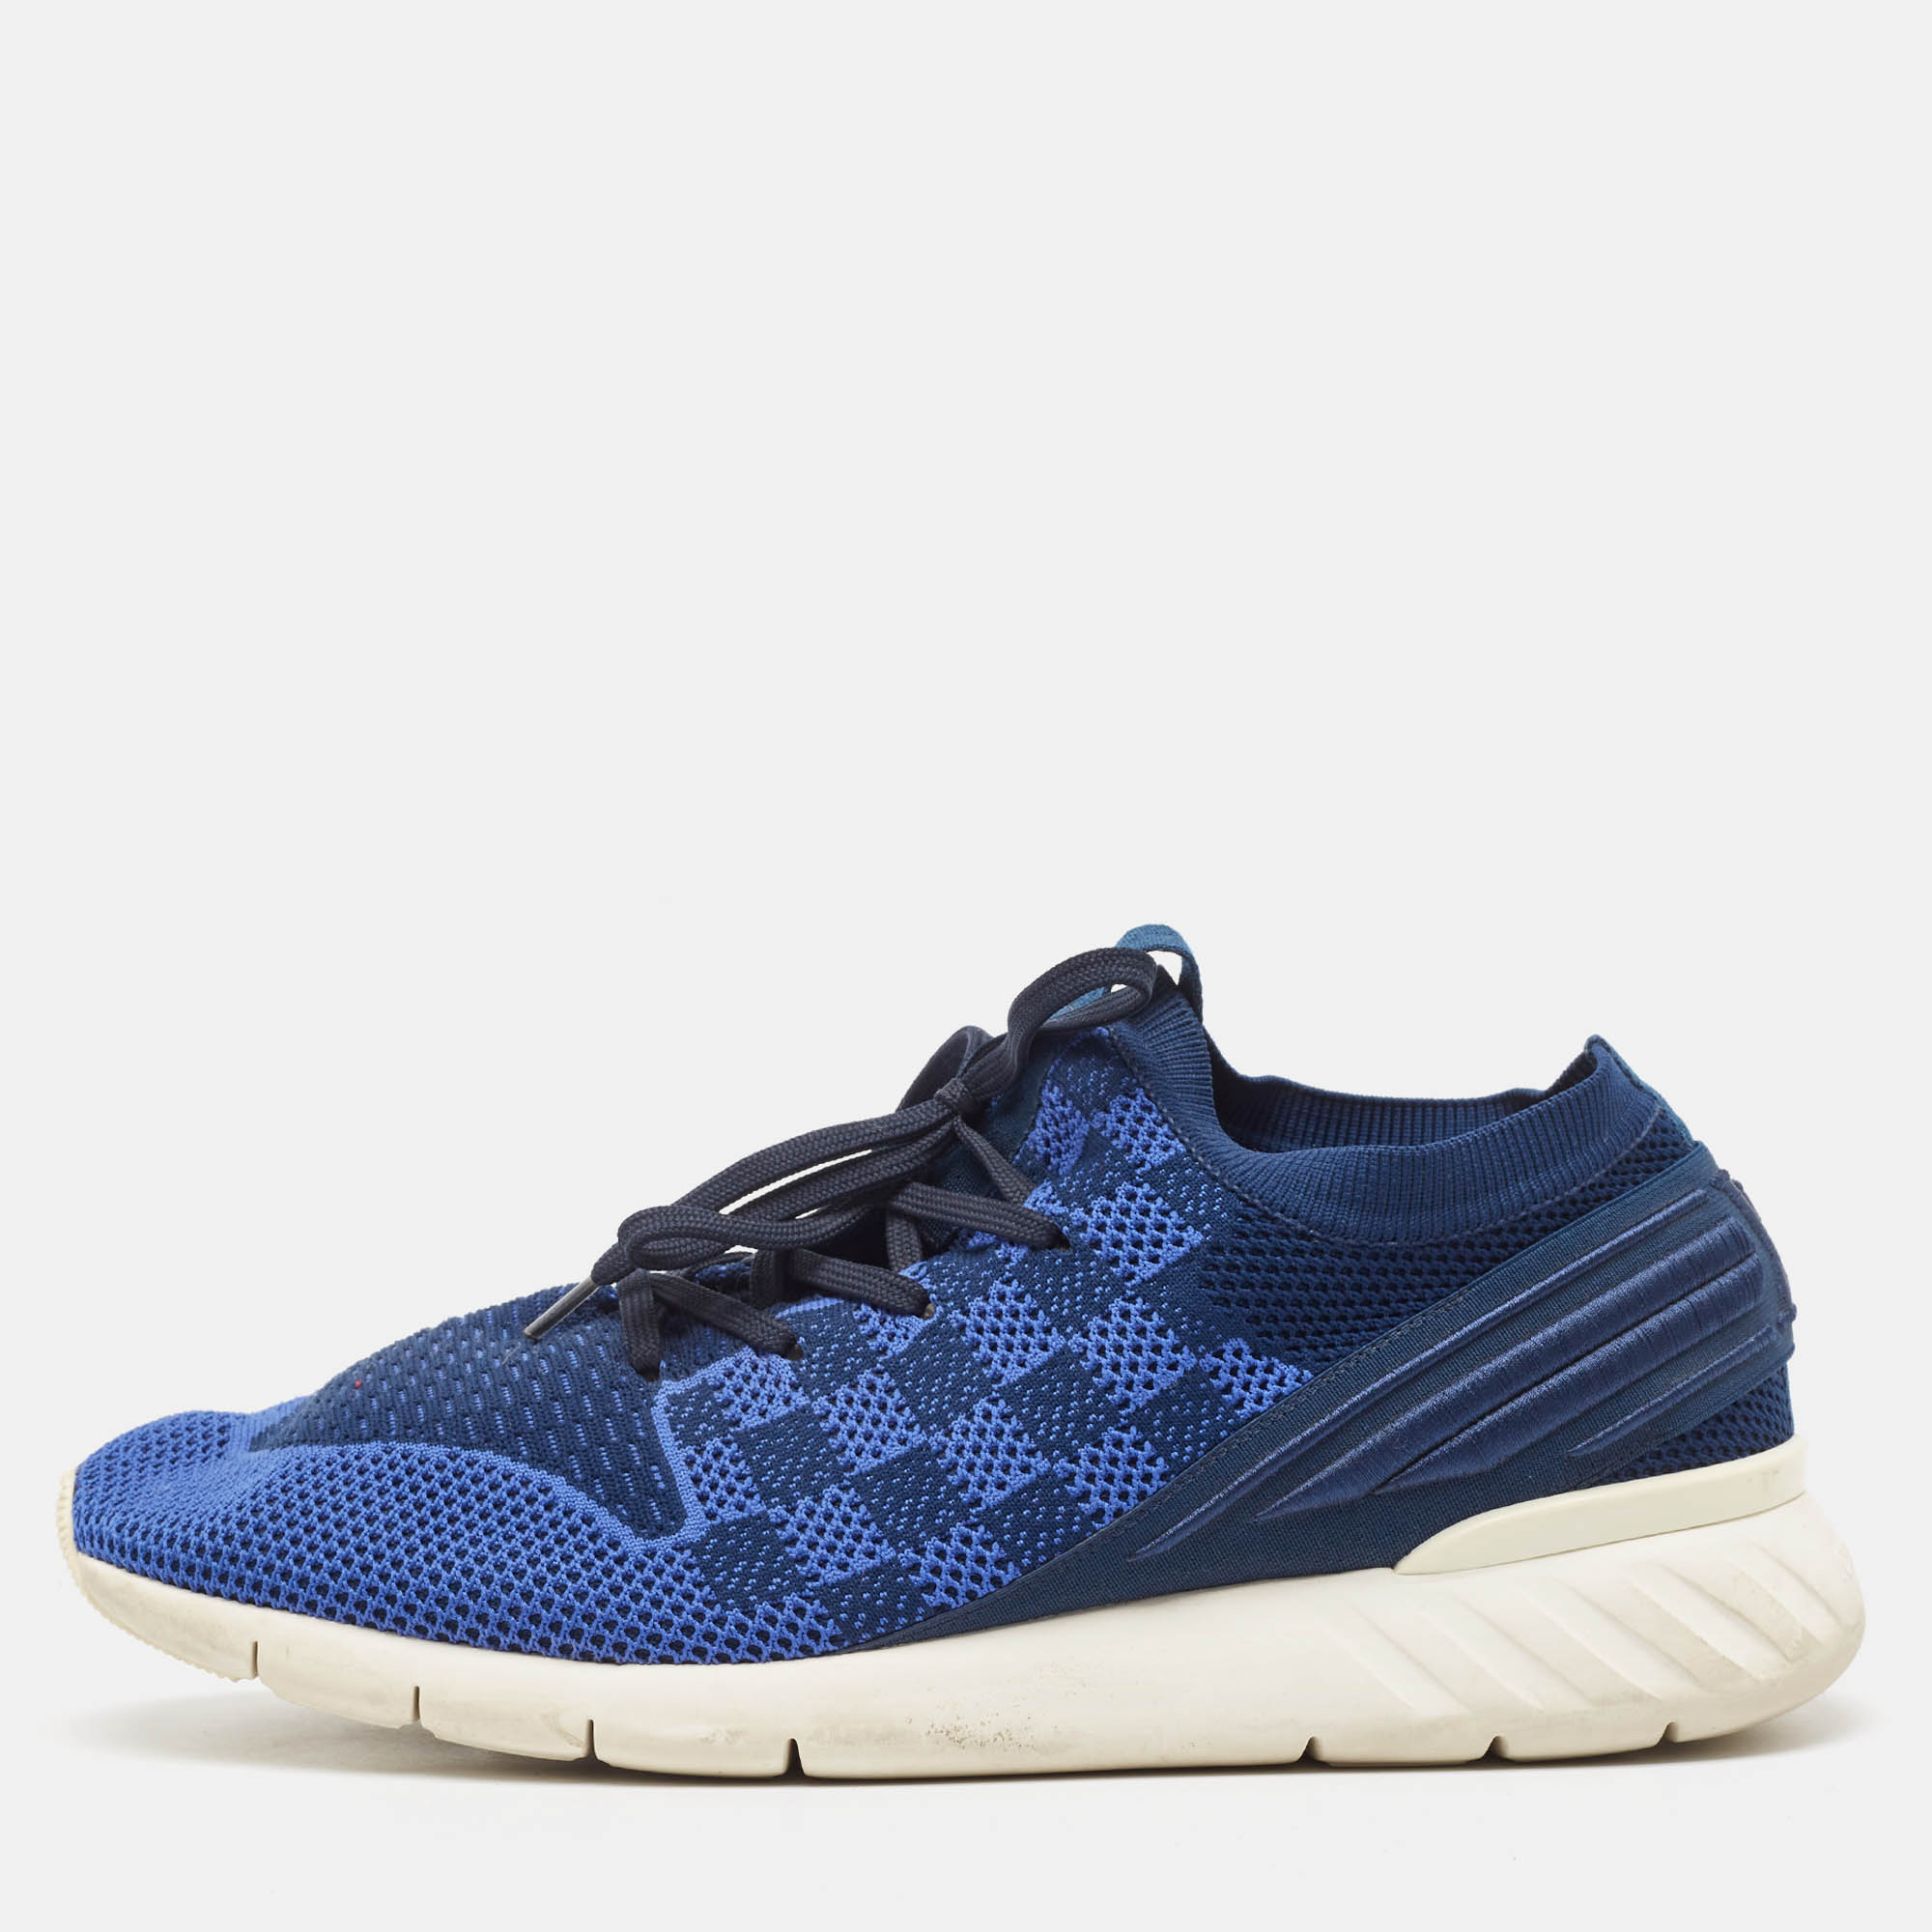 Louis vuitton blue knit fabric fastlane sneakers size 44